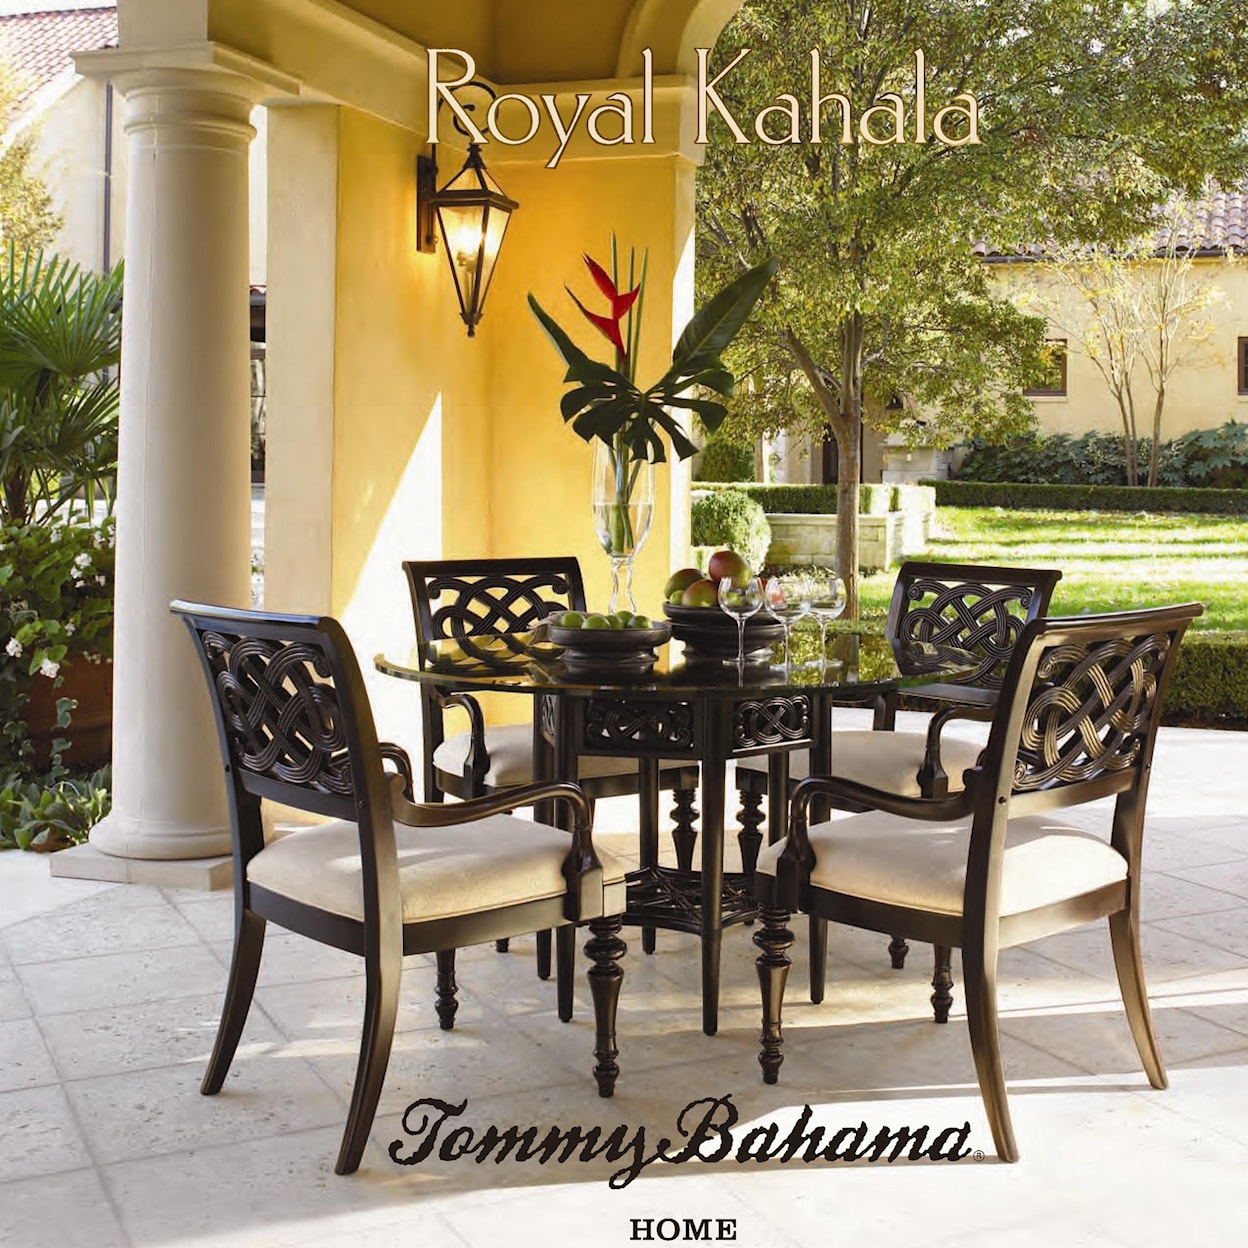 Tommy Bahama Home Royal Kahala Royal Suite Dresser